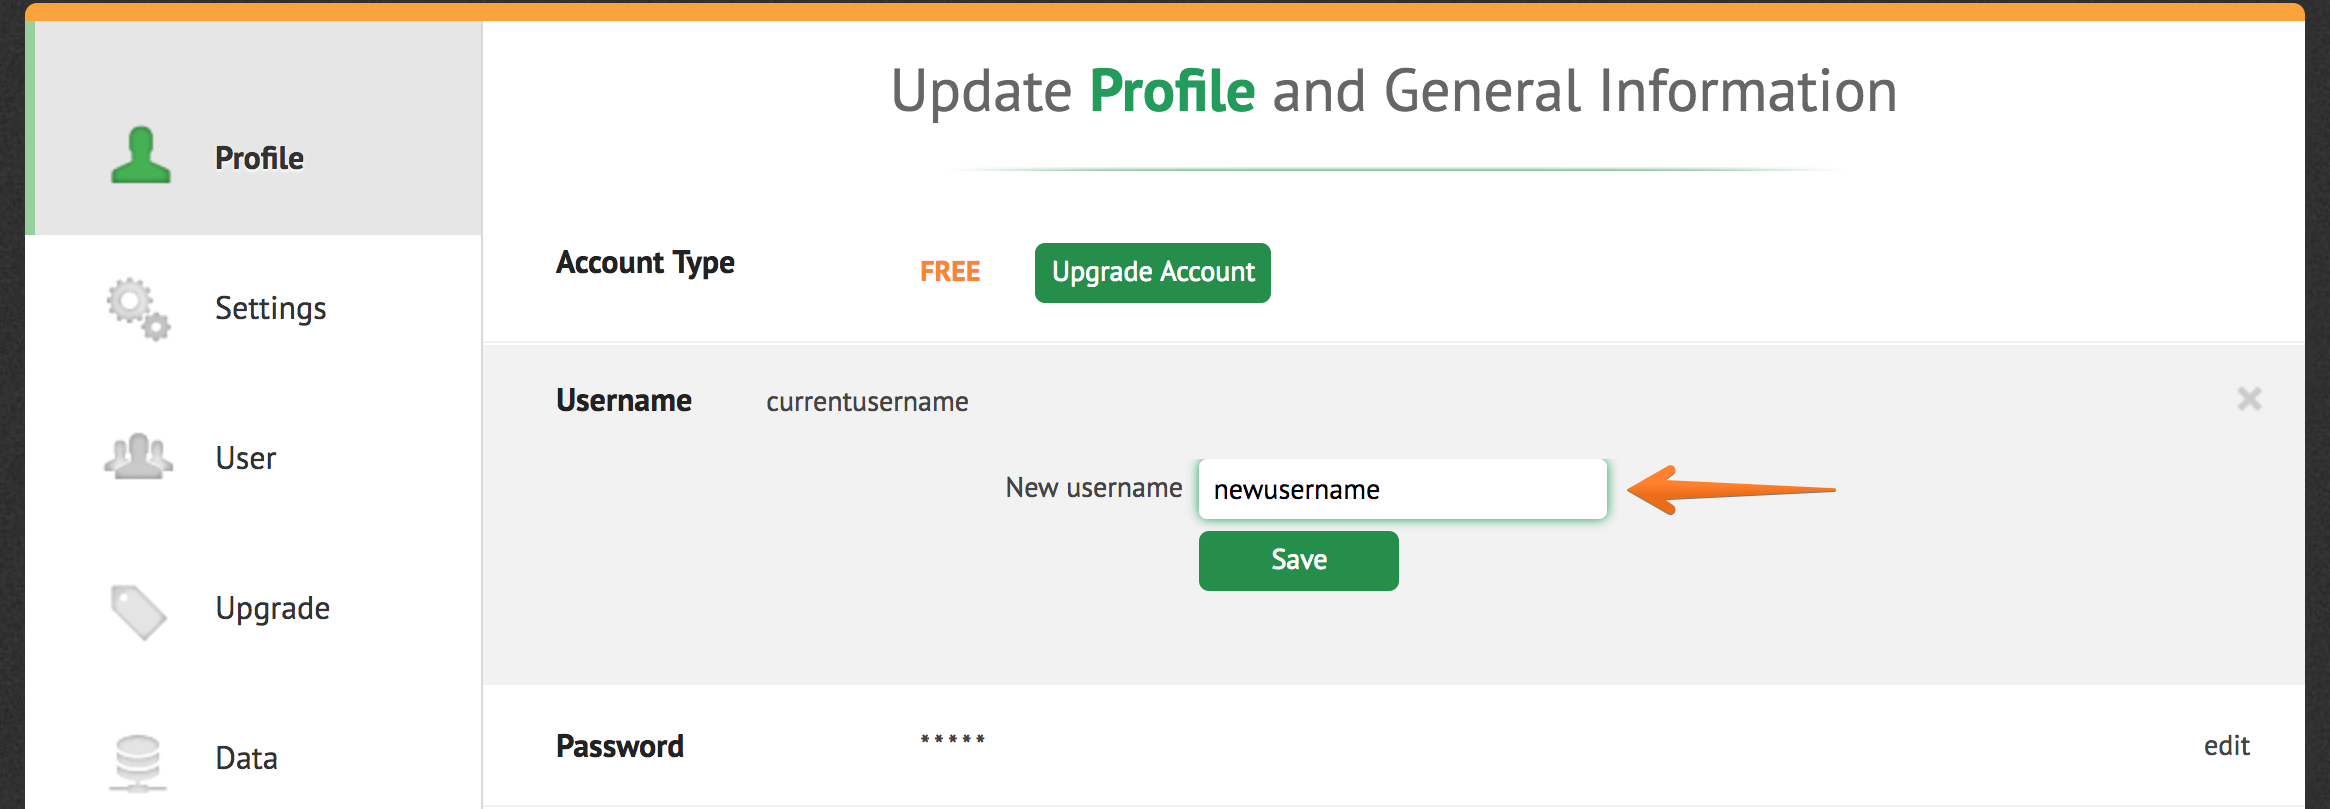 How can I change my username? Image 1 Screenshot 20